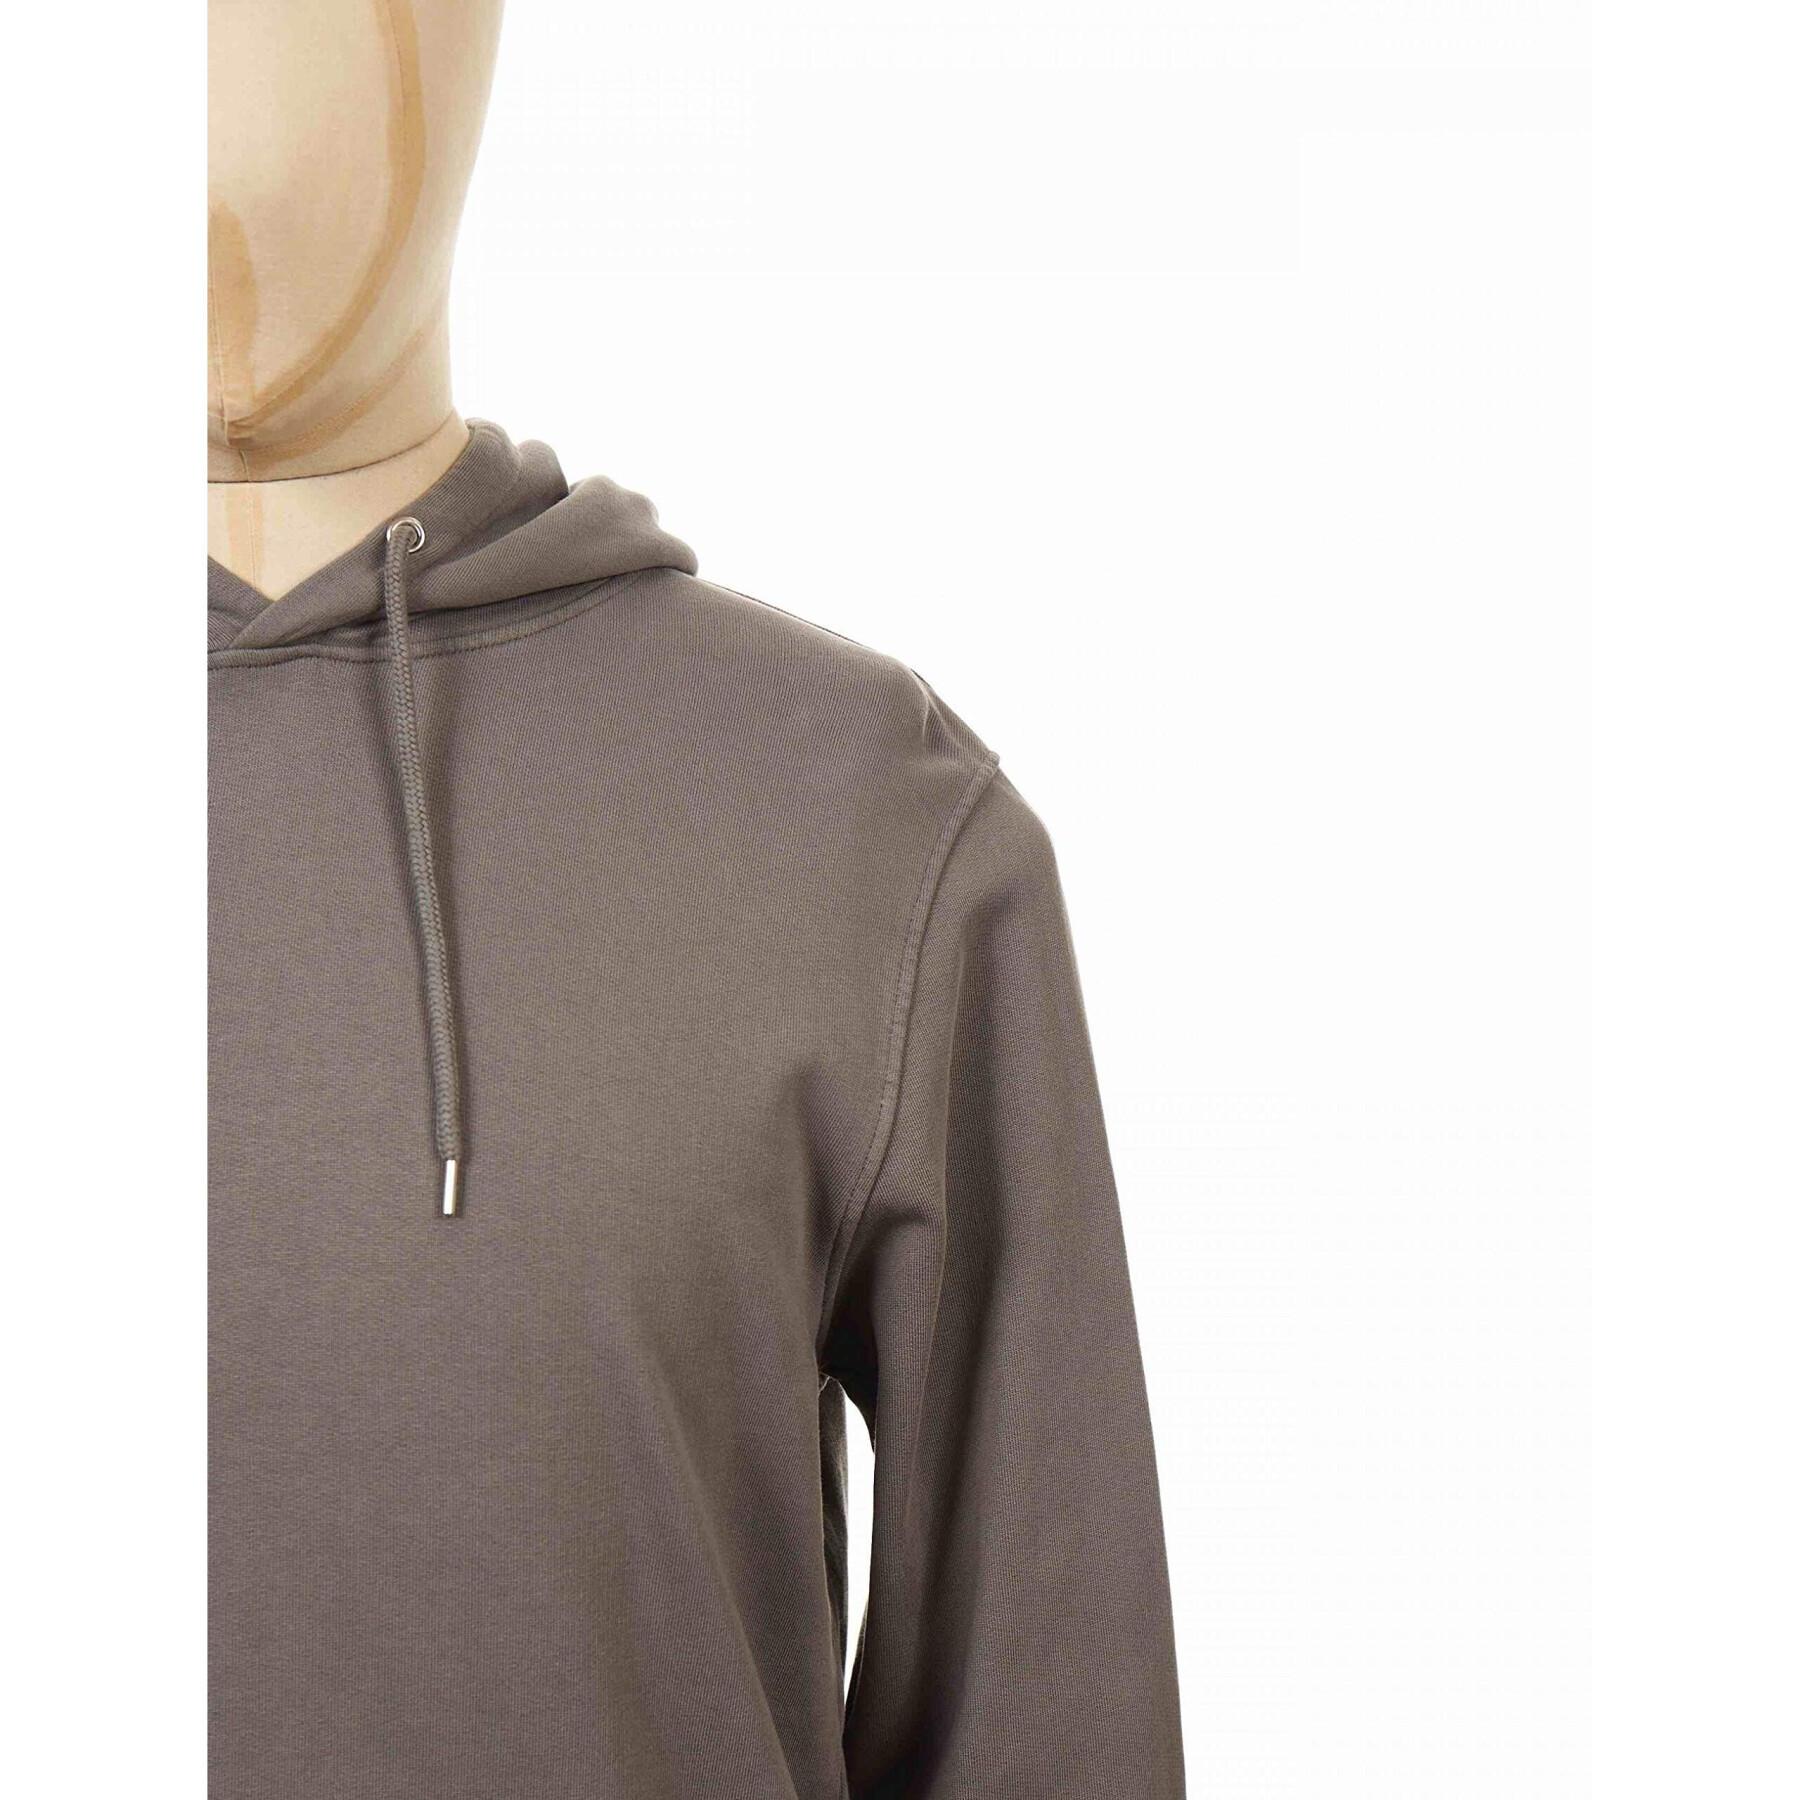 Hooded sweatshirt Colorful Standard Classic Organic storm grey